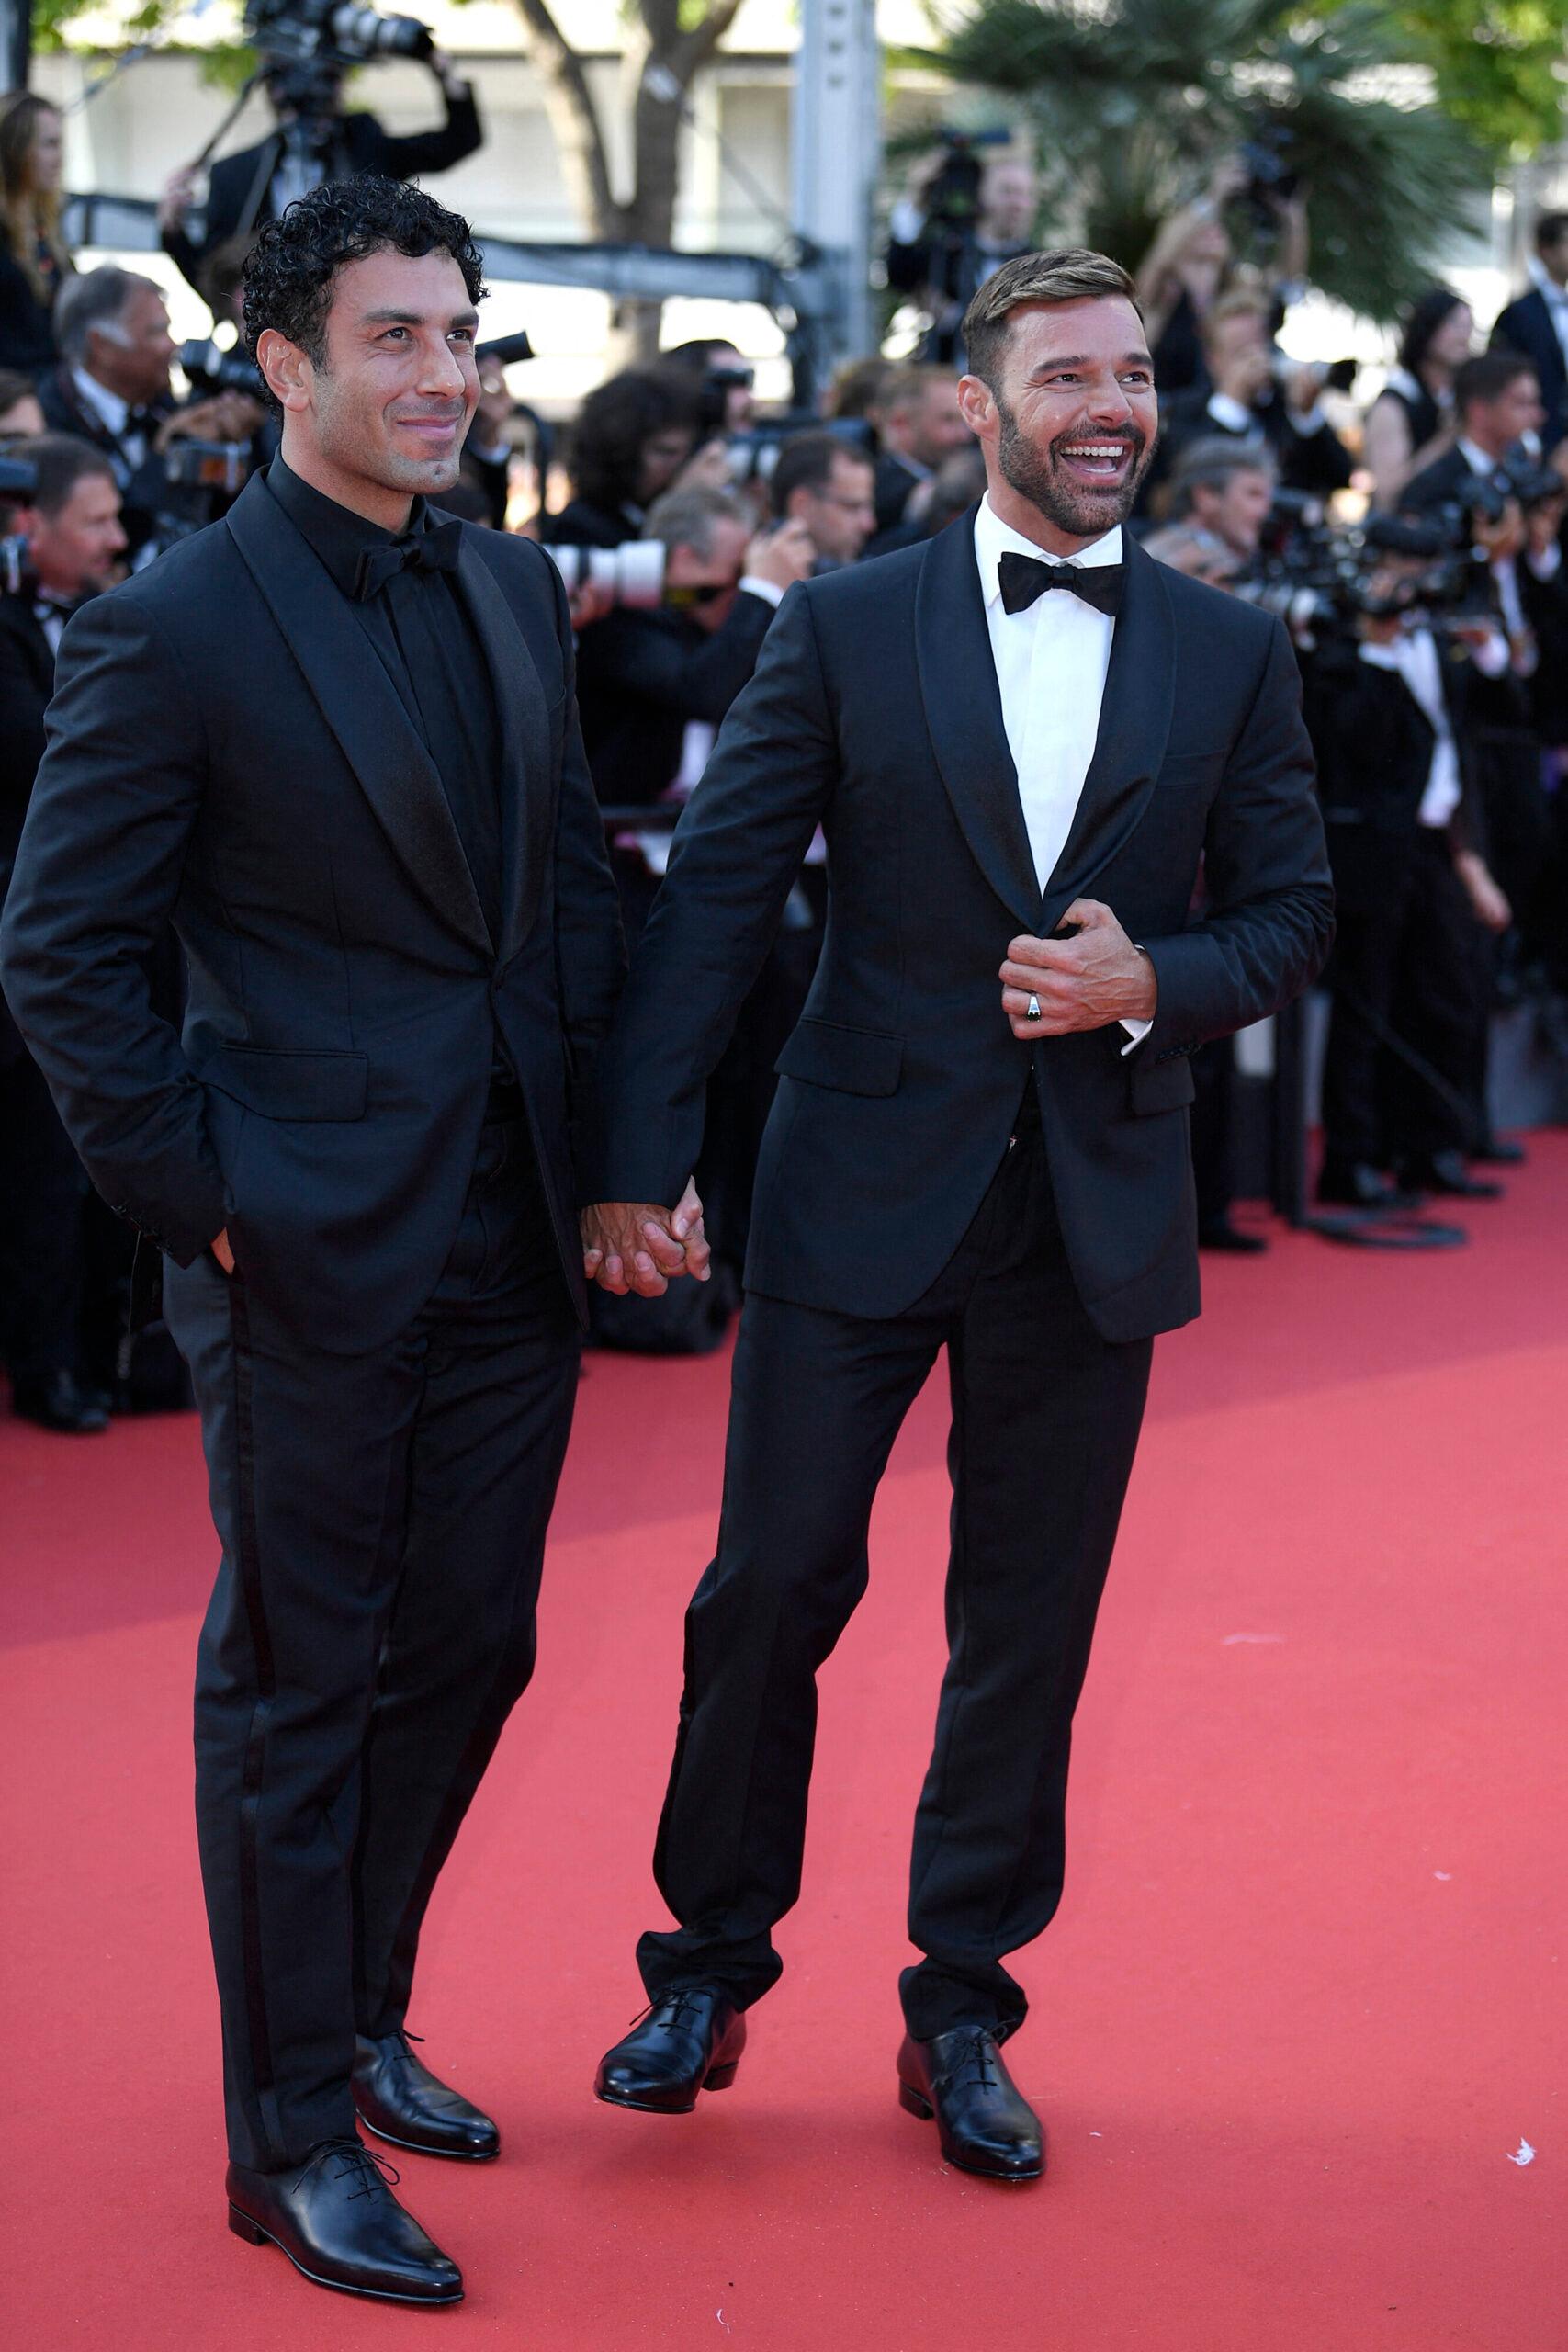 Ricky Martin's Settles Divorce With Ex-Husband Jwan Yosef